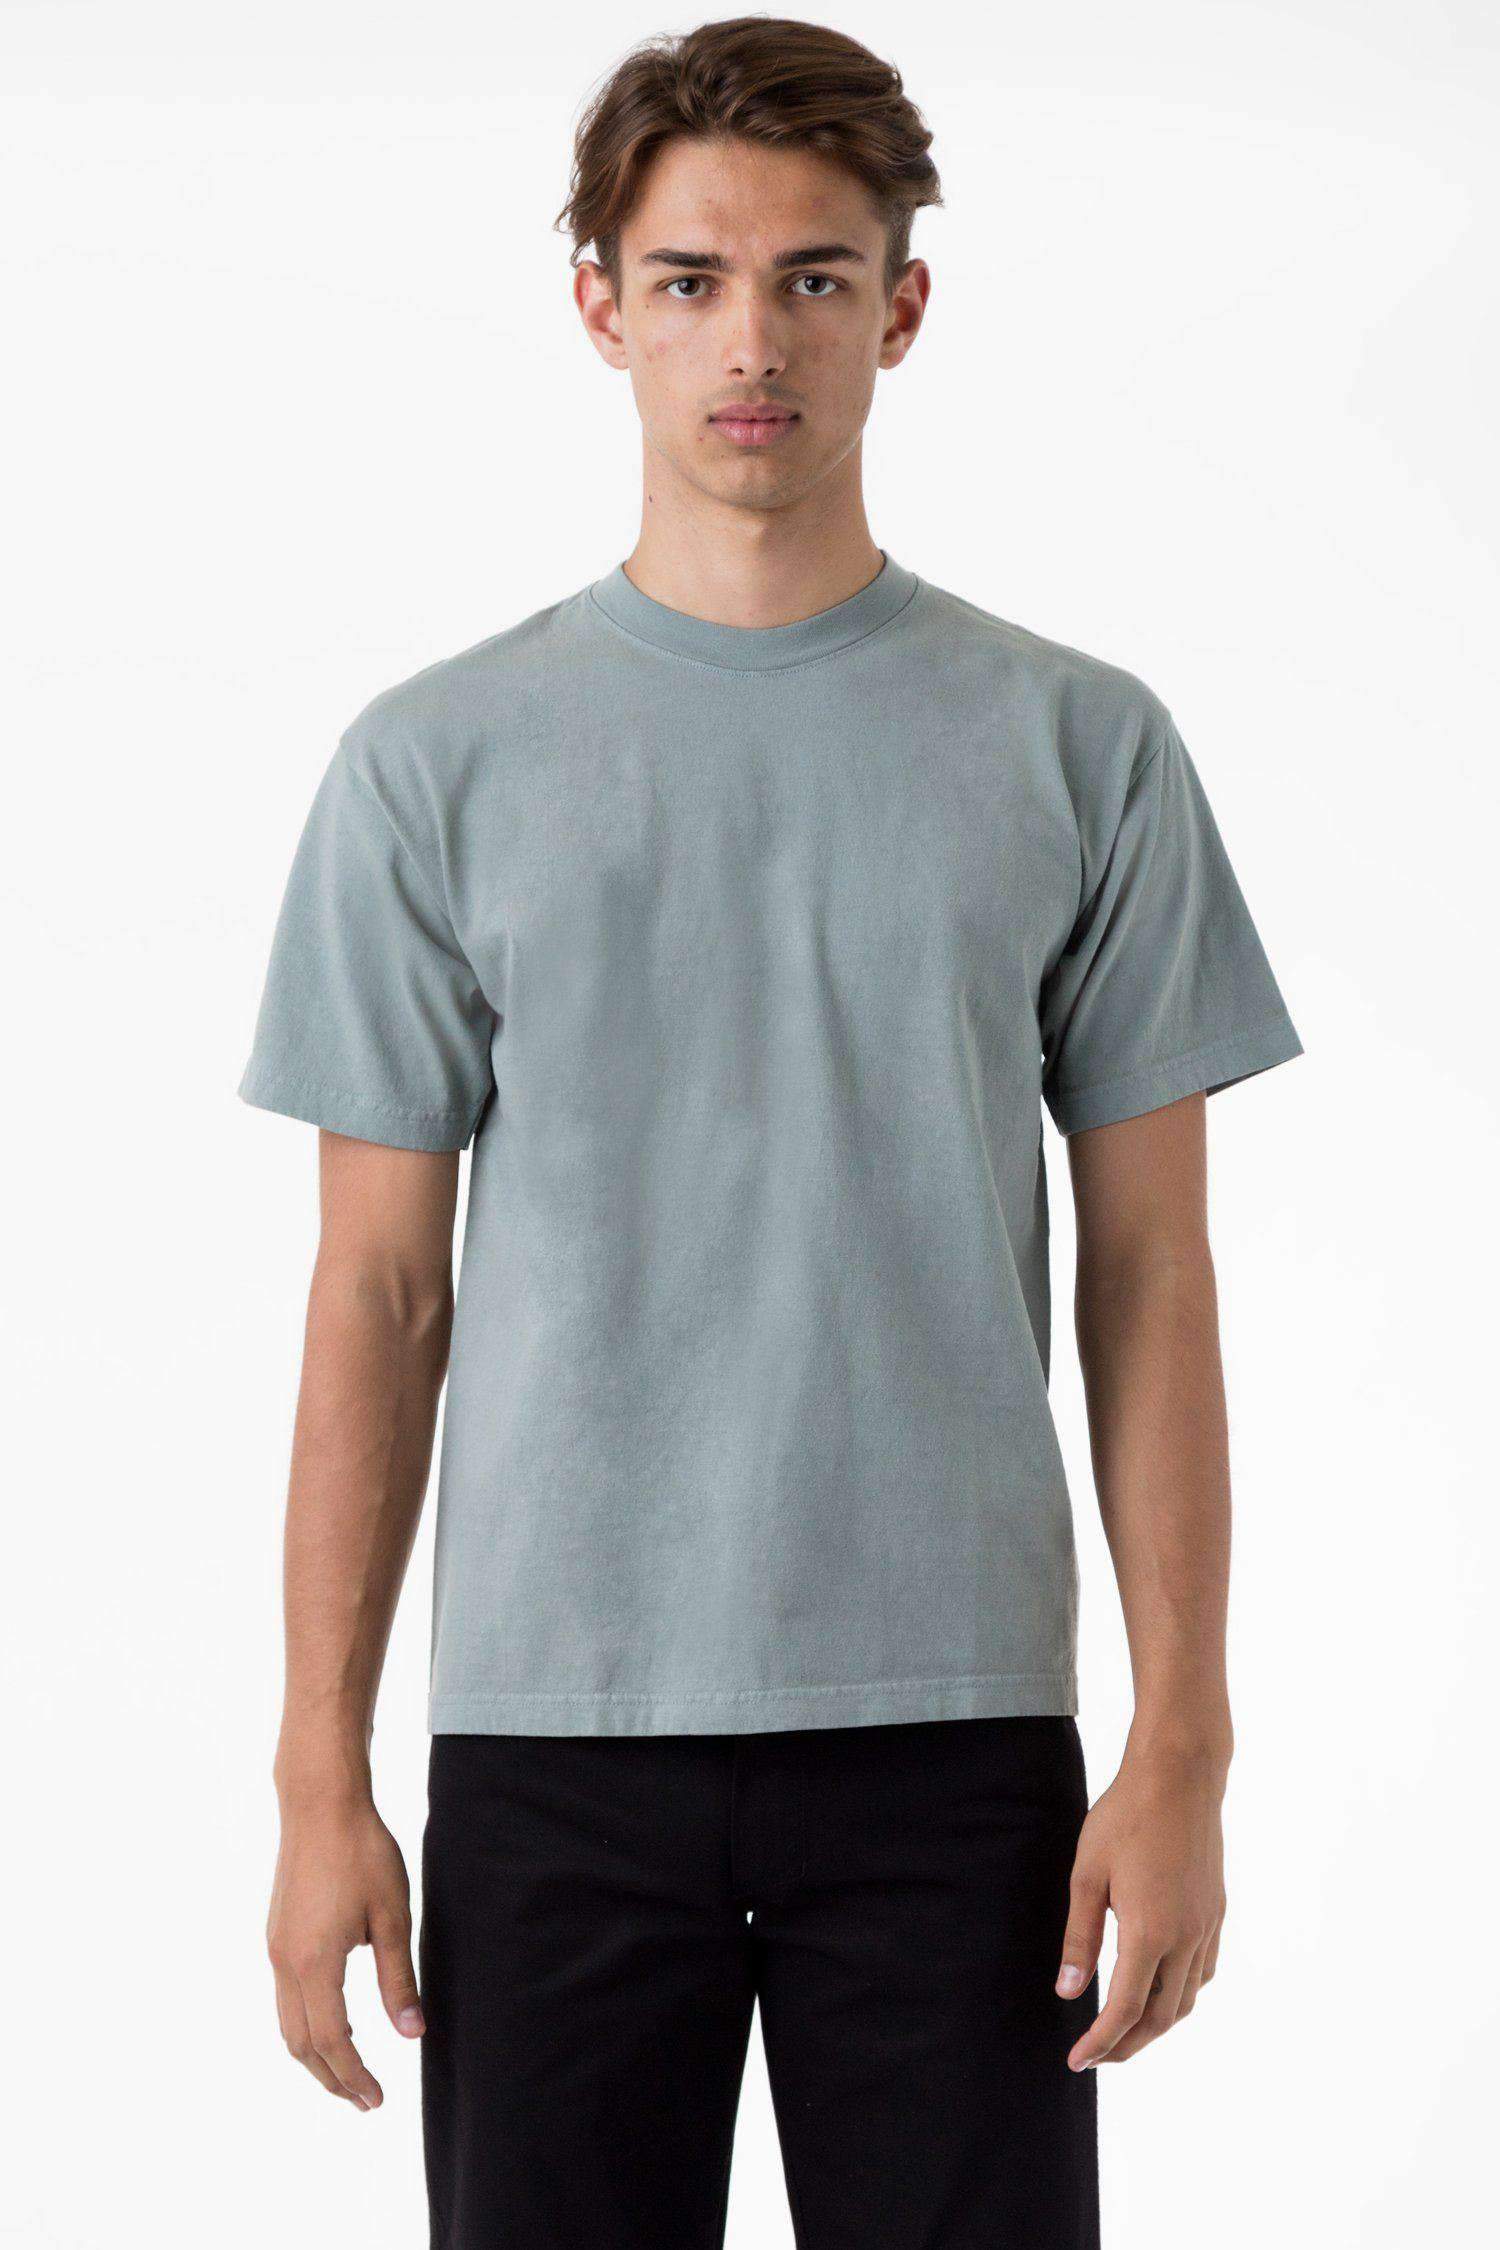 1801GD - 6.5oz Garment Dye Pastel Crew Neck T-Shirt T-Shirt Los Angeles Apparel Sage S 